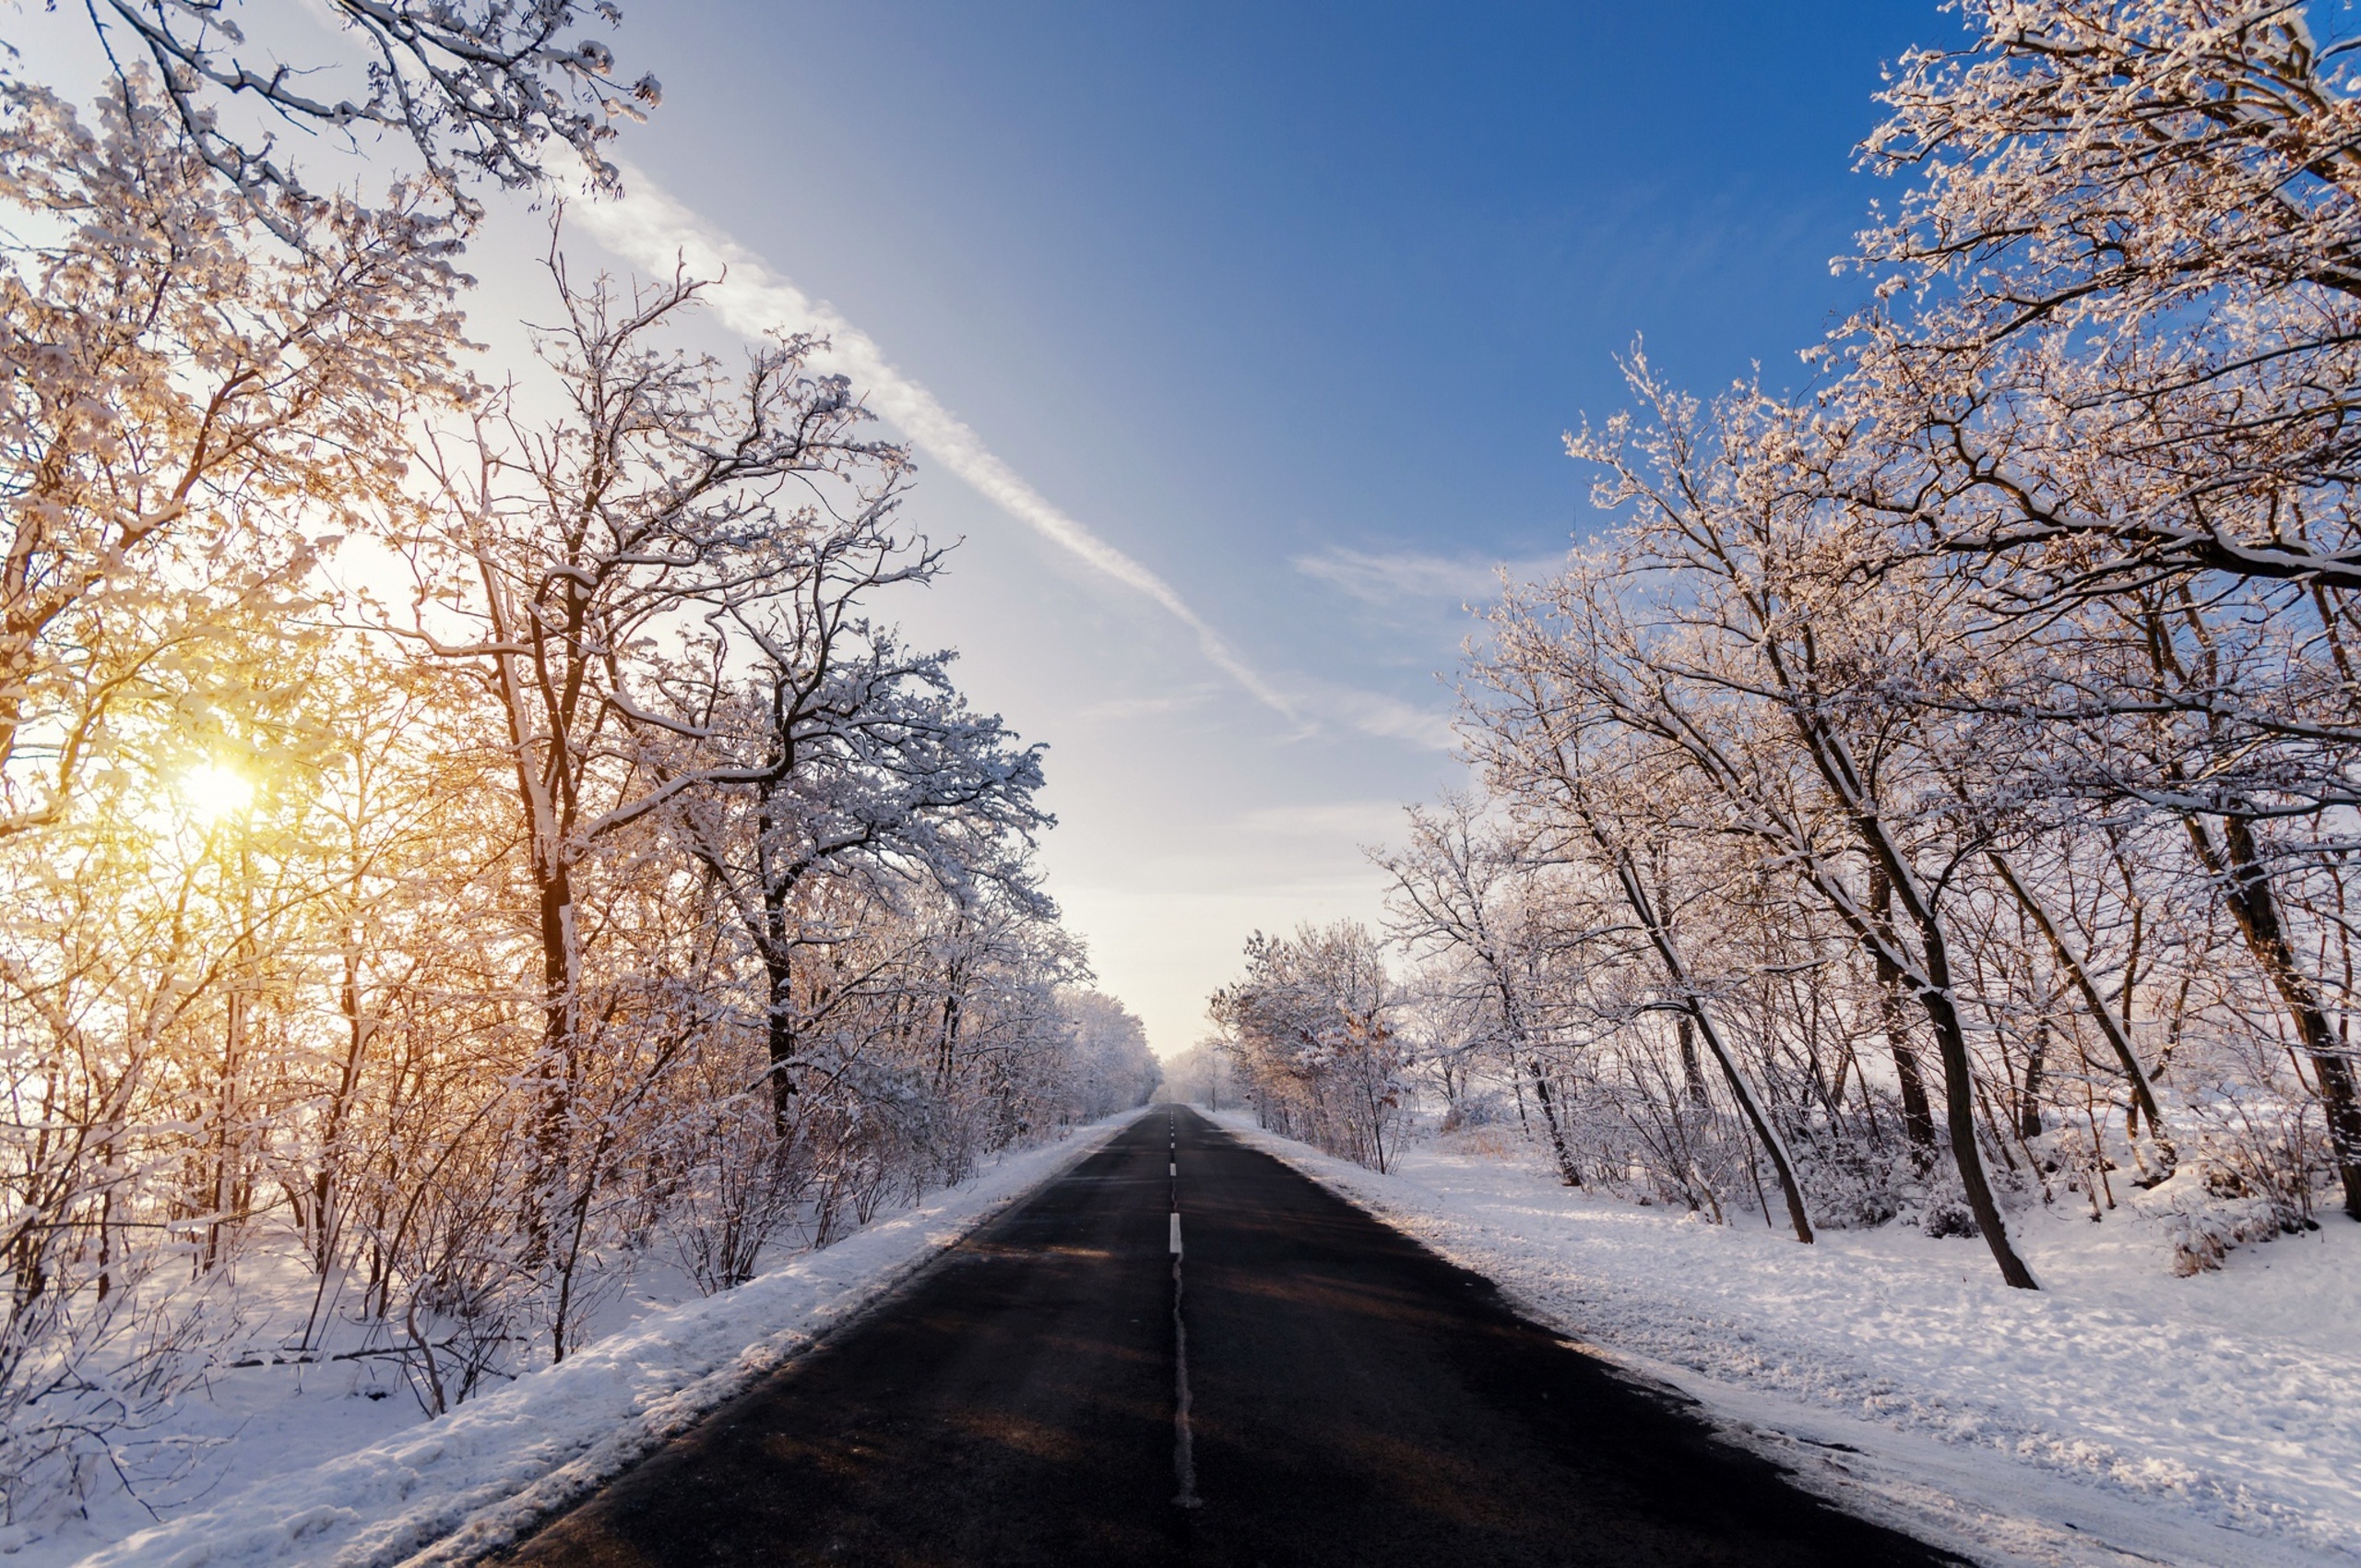 Тема зимней дороги. Зимняя дорога. Заснеженная дорога. Солнечный день зима дорога. Зима деревья дорога.